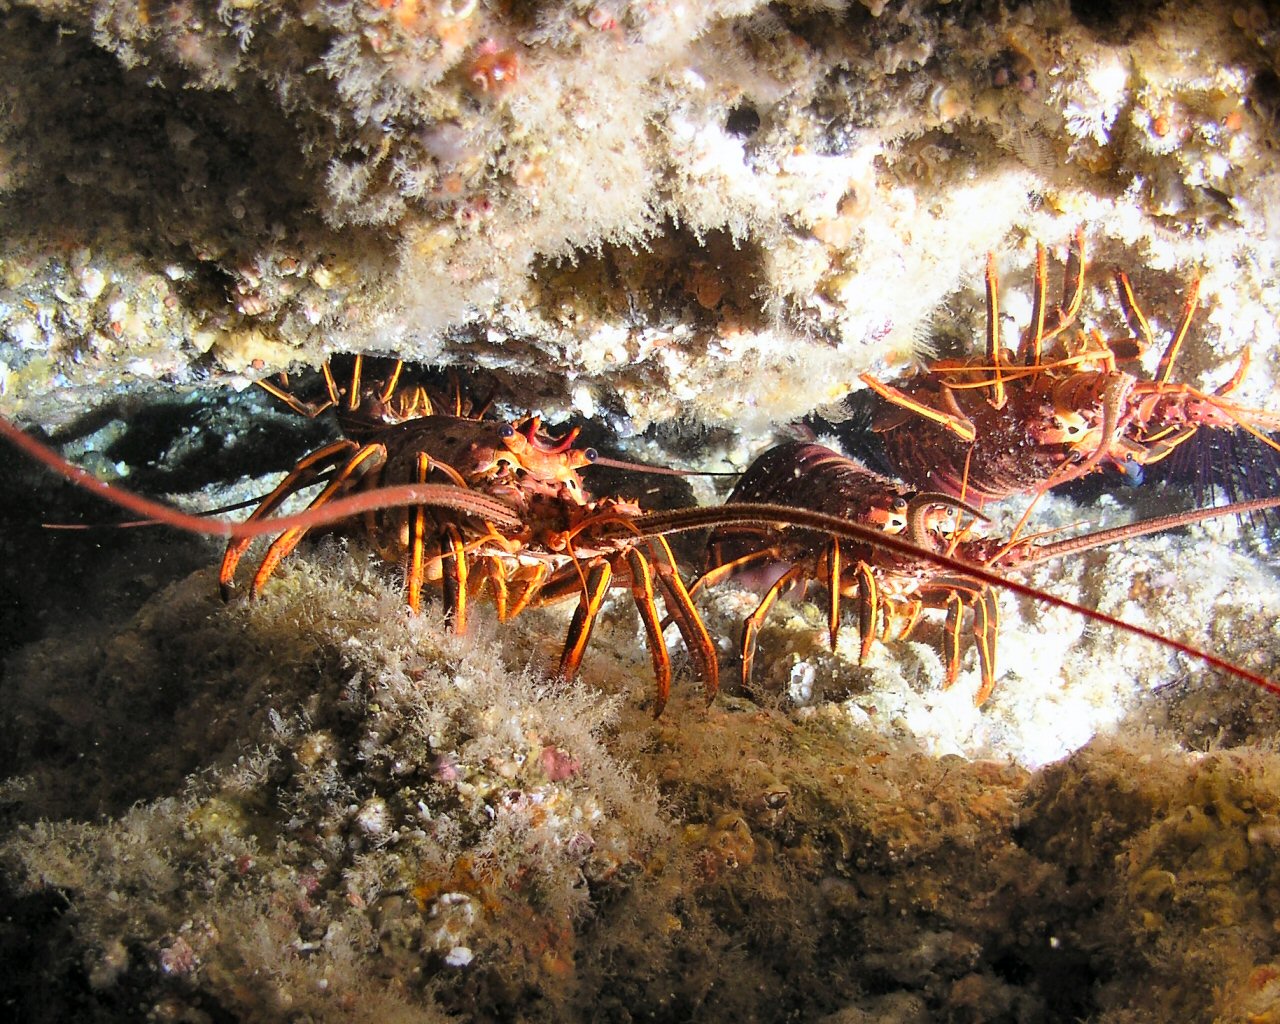 Lobsters at Bird Rock